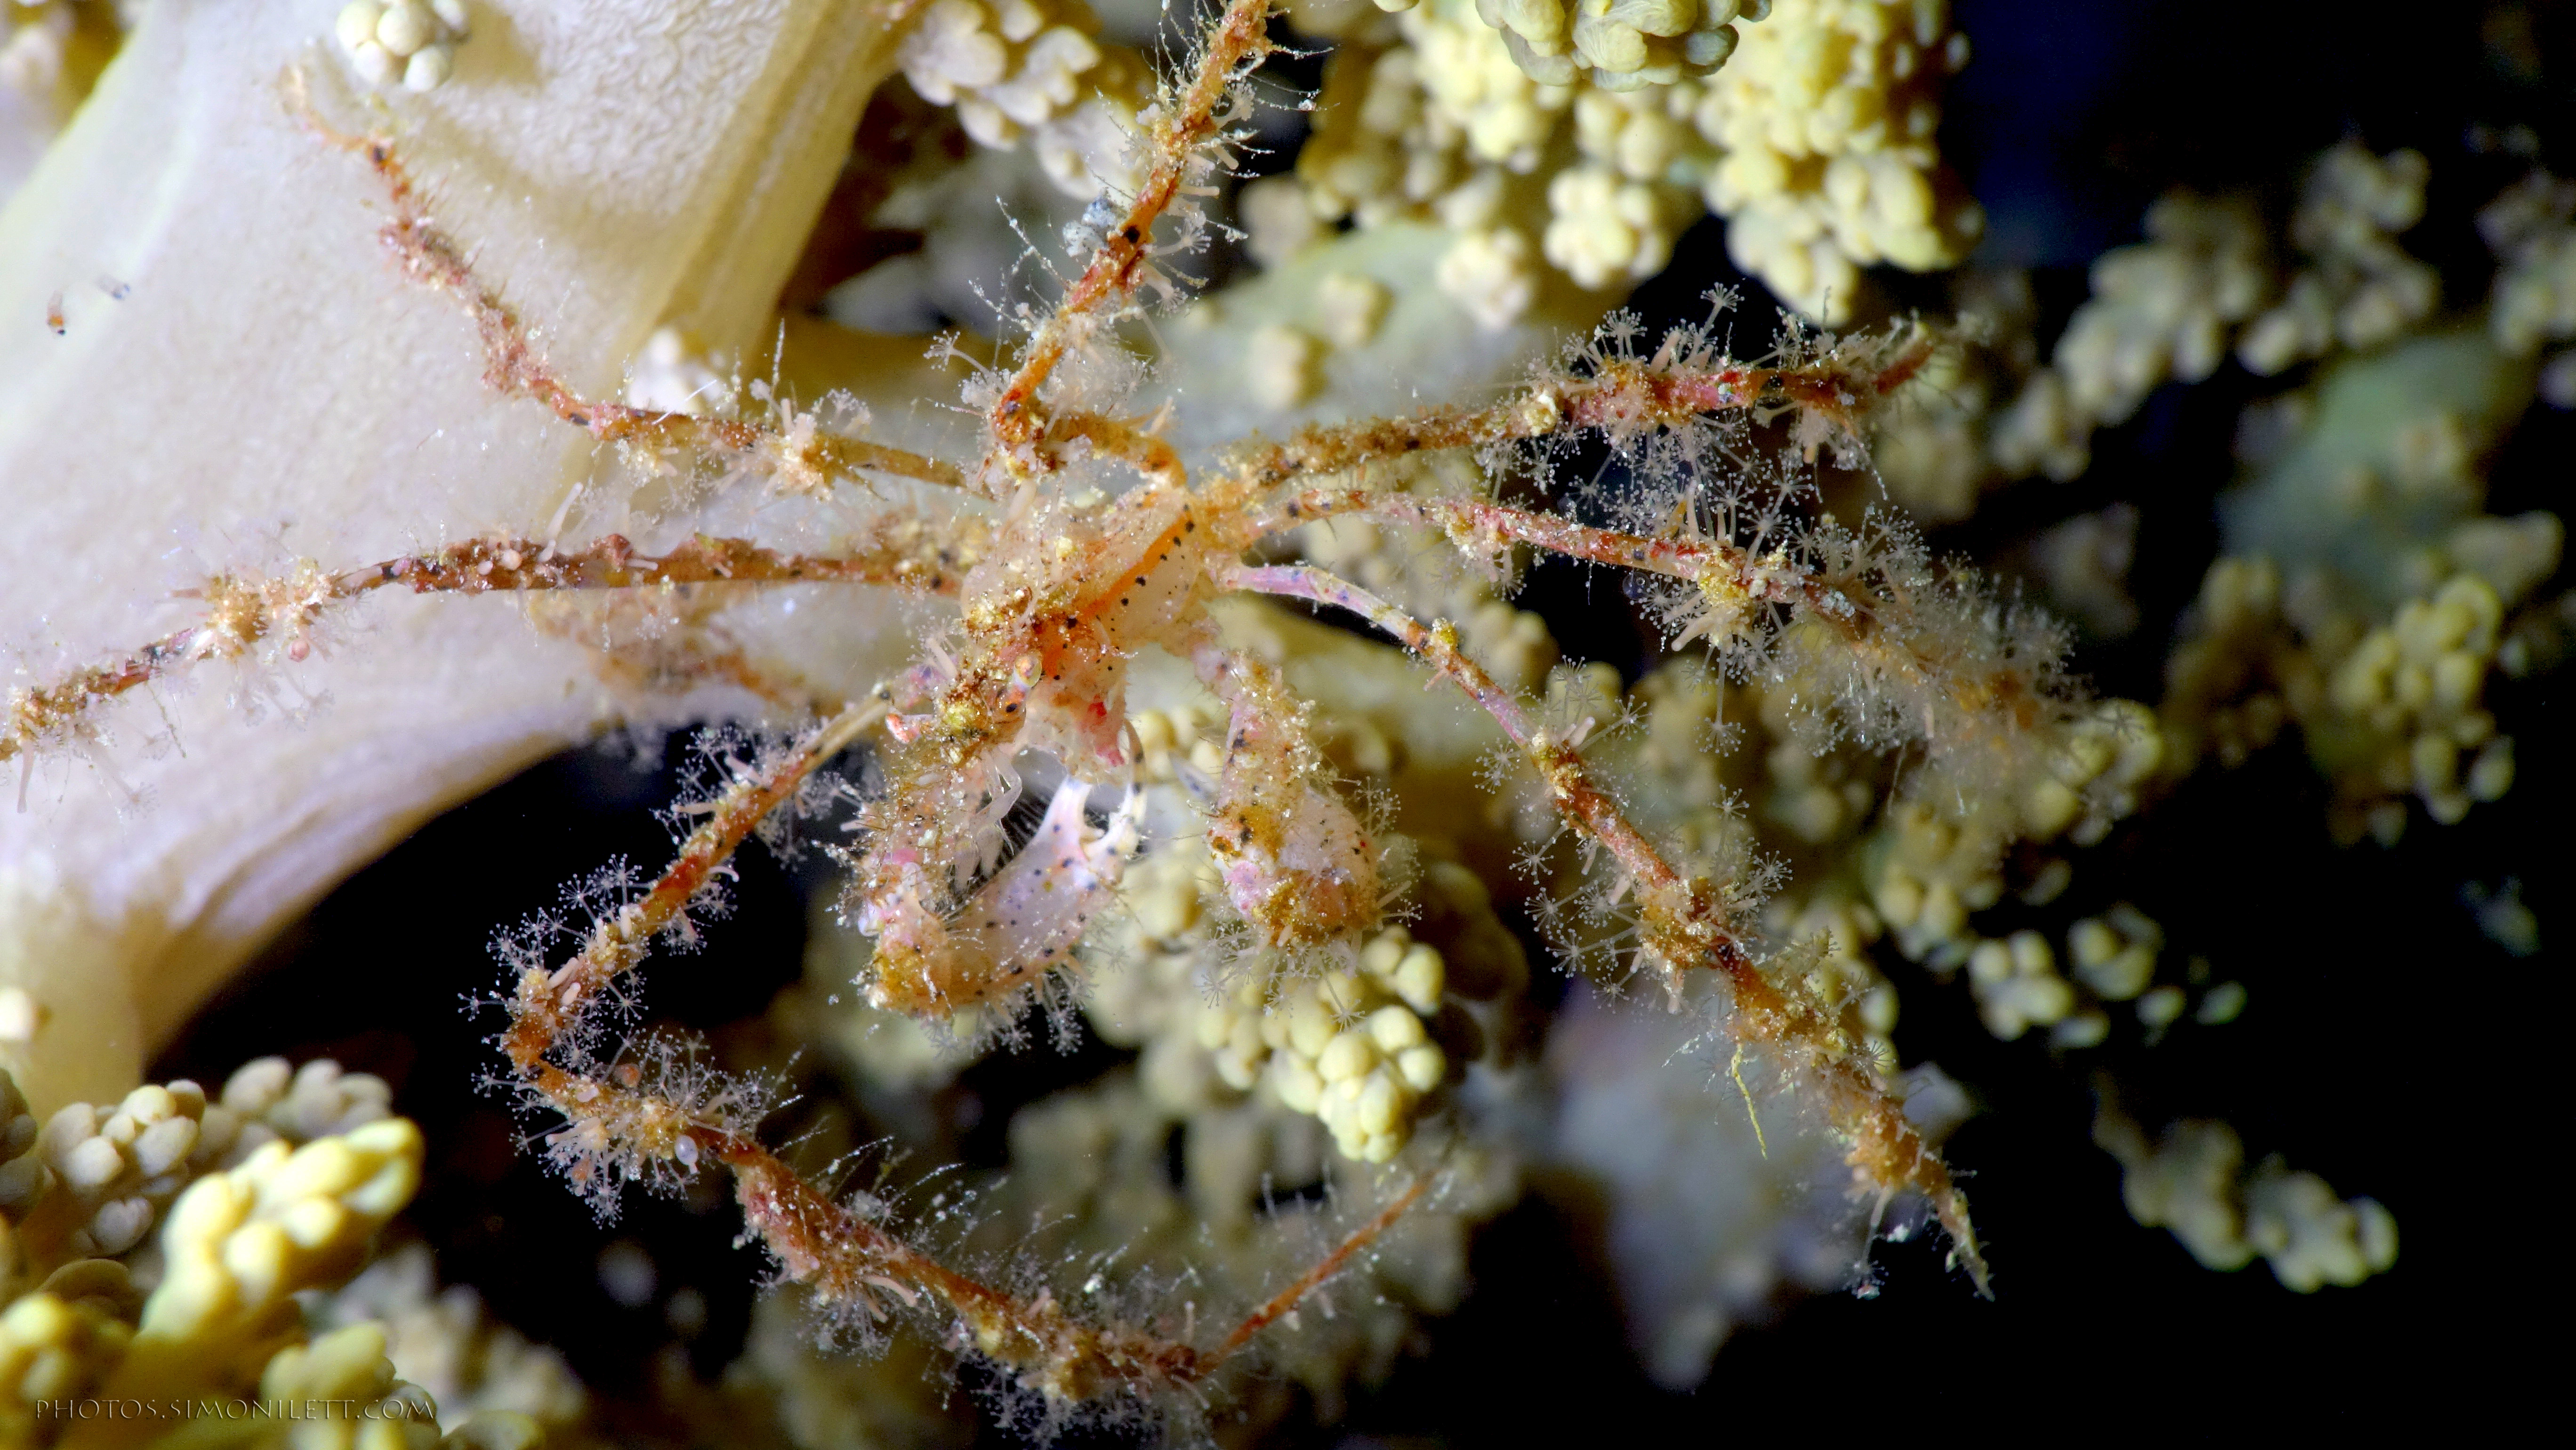 Juvenile Decorator Crab  Underwater Photography by Simon Ilett